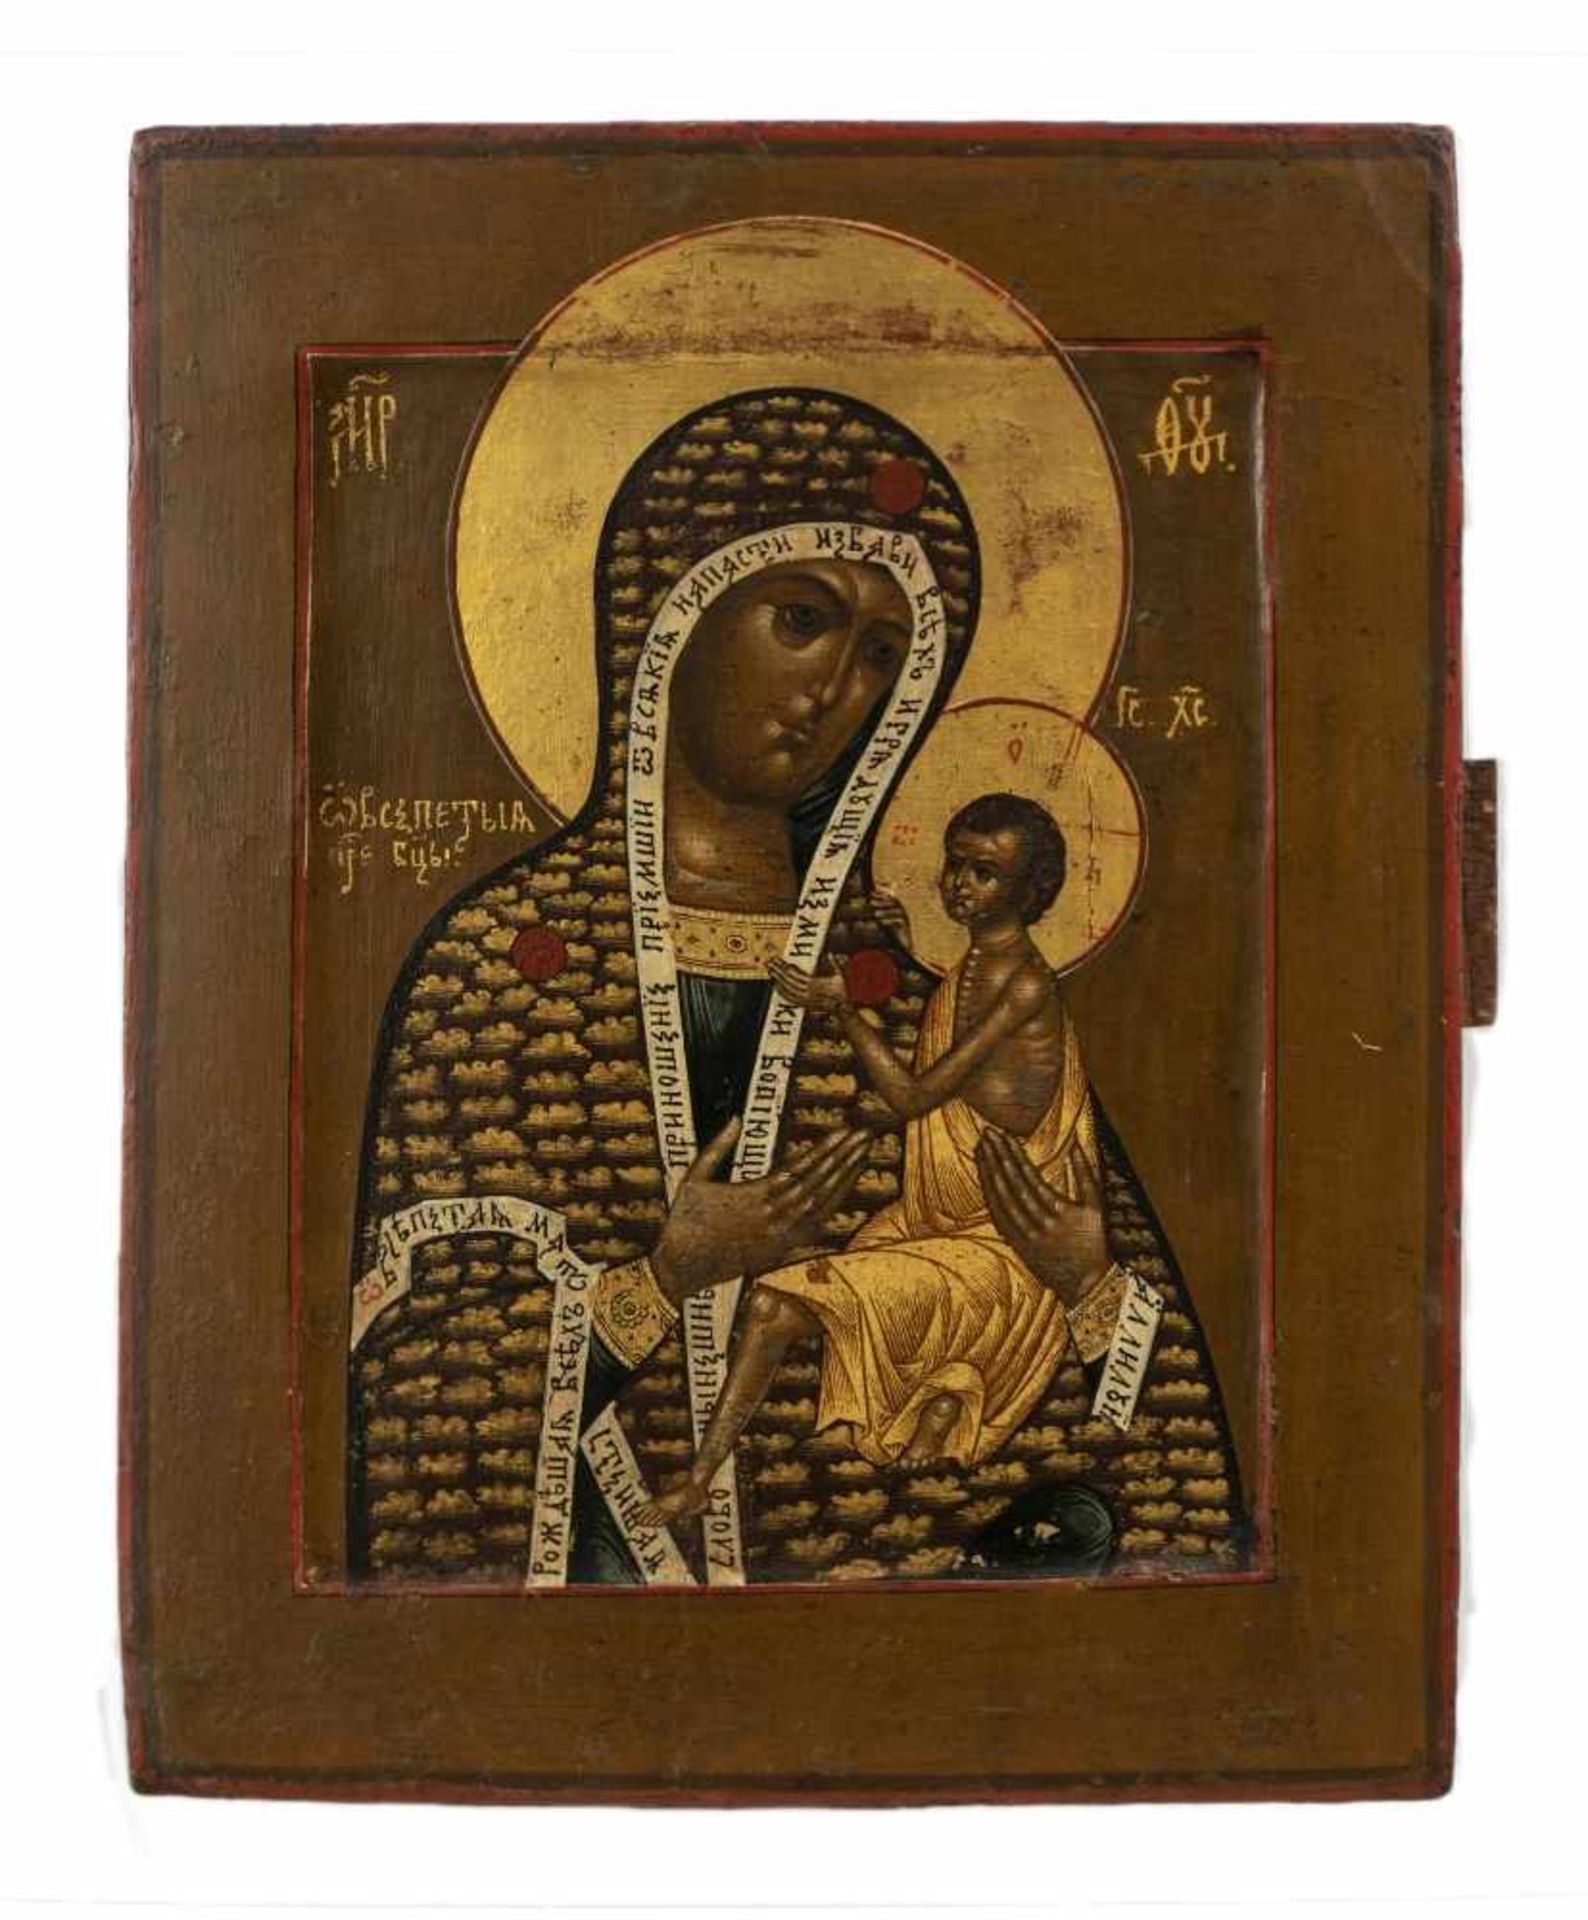 Gottesmutter OvsepethajaRussische Ikone, Tempera / Holz, 19. Jh.22,5 x 19 cmDie halbfigurig